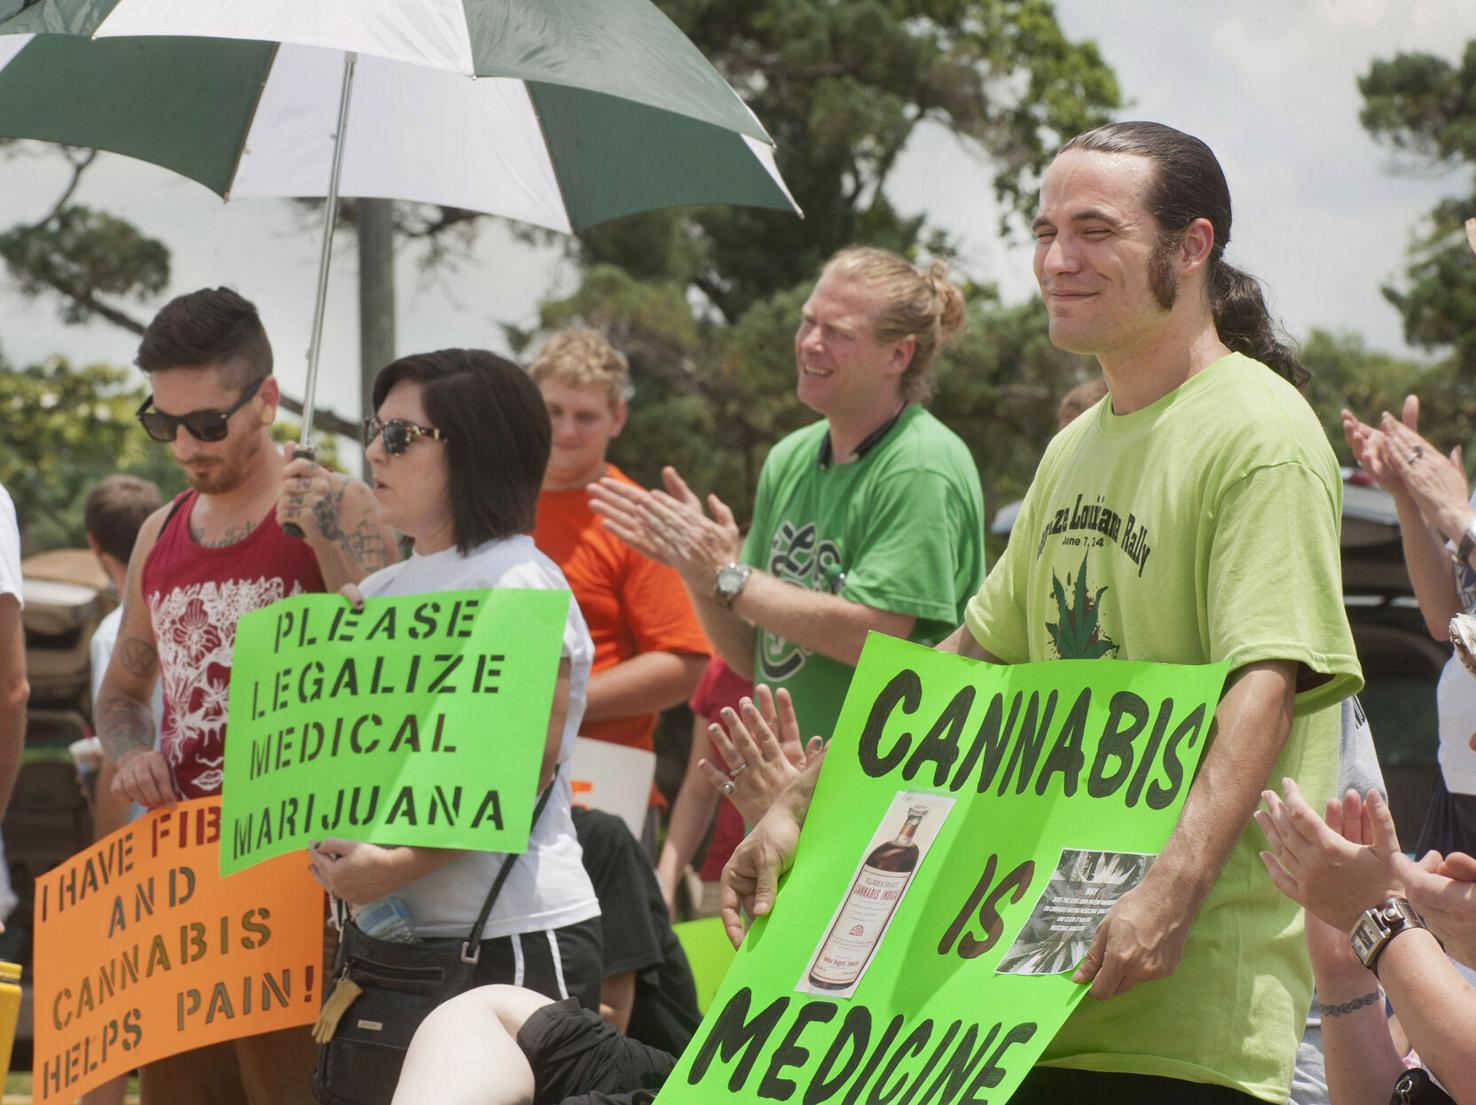 When will Louisiana finally legalize recreational cannabis? The